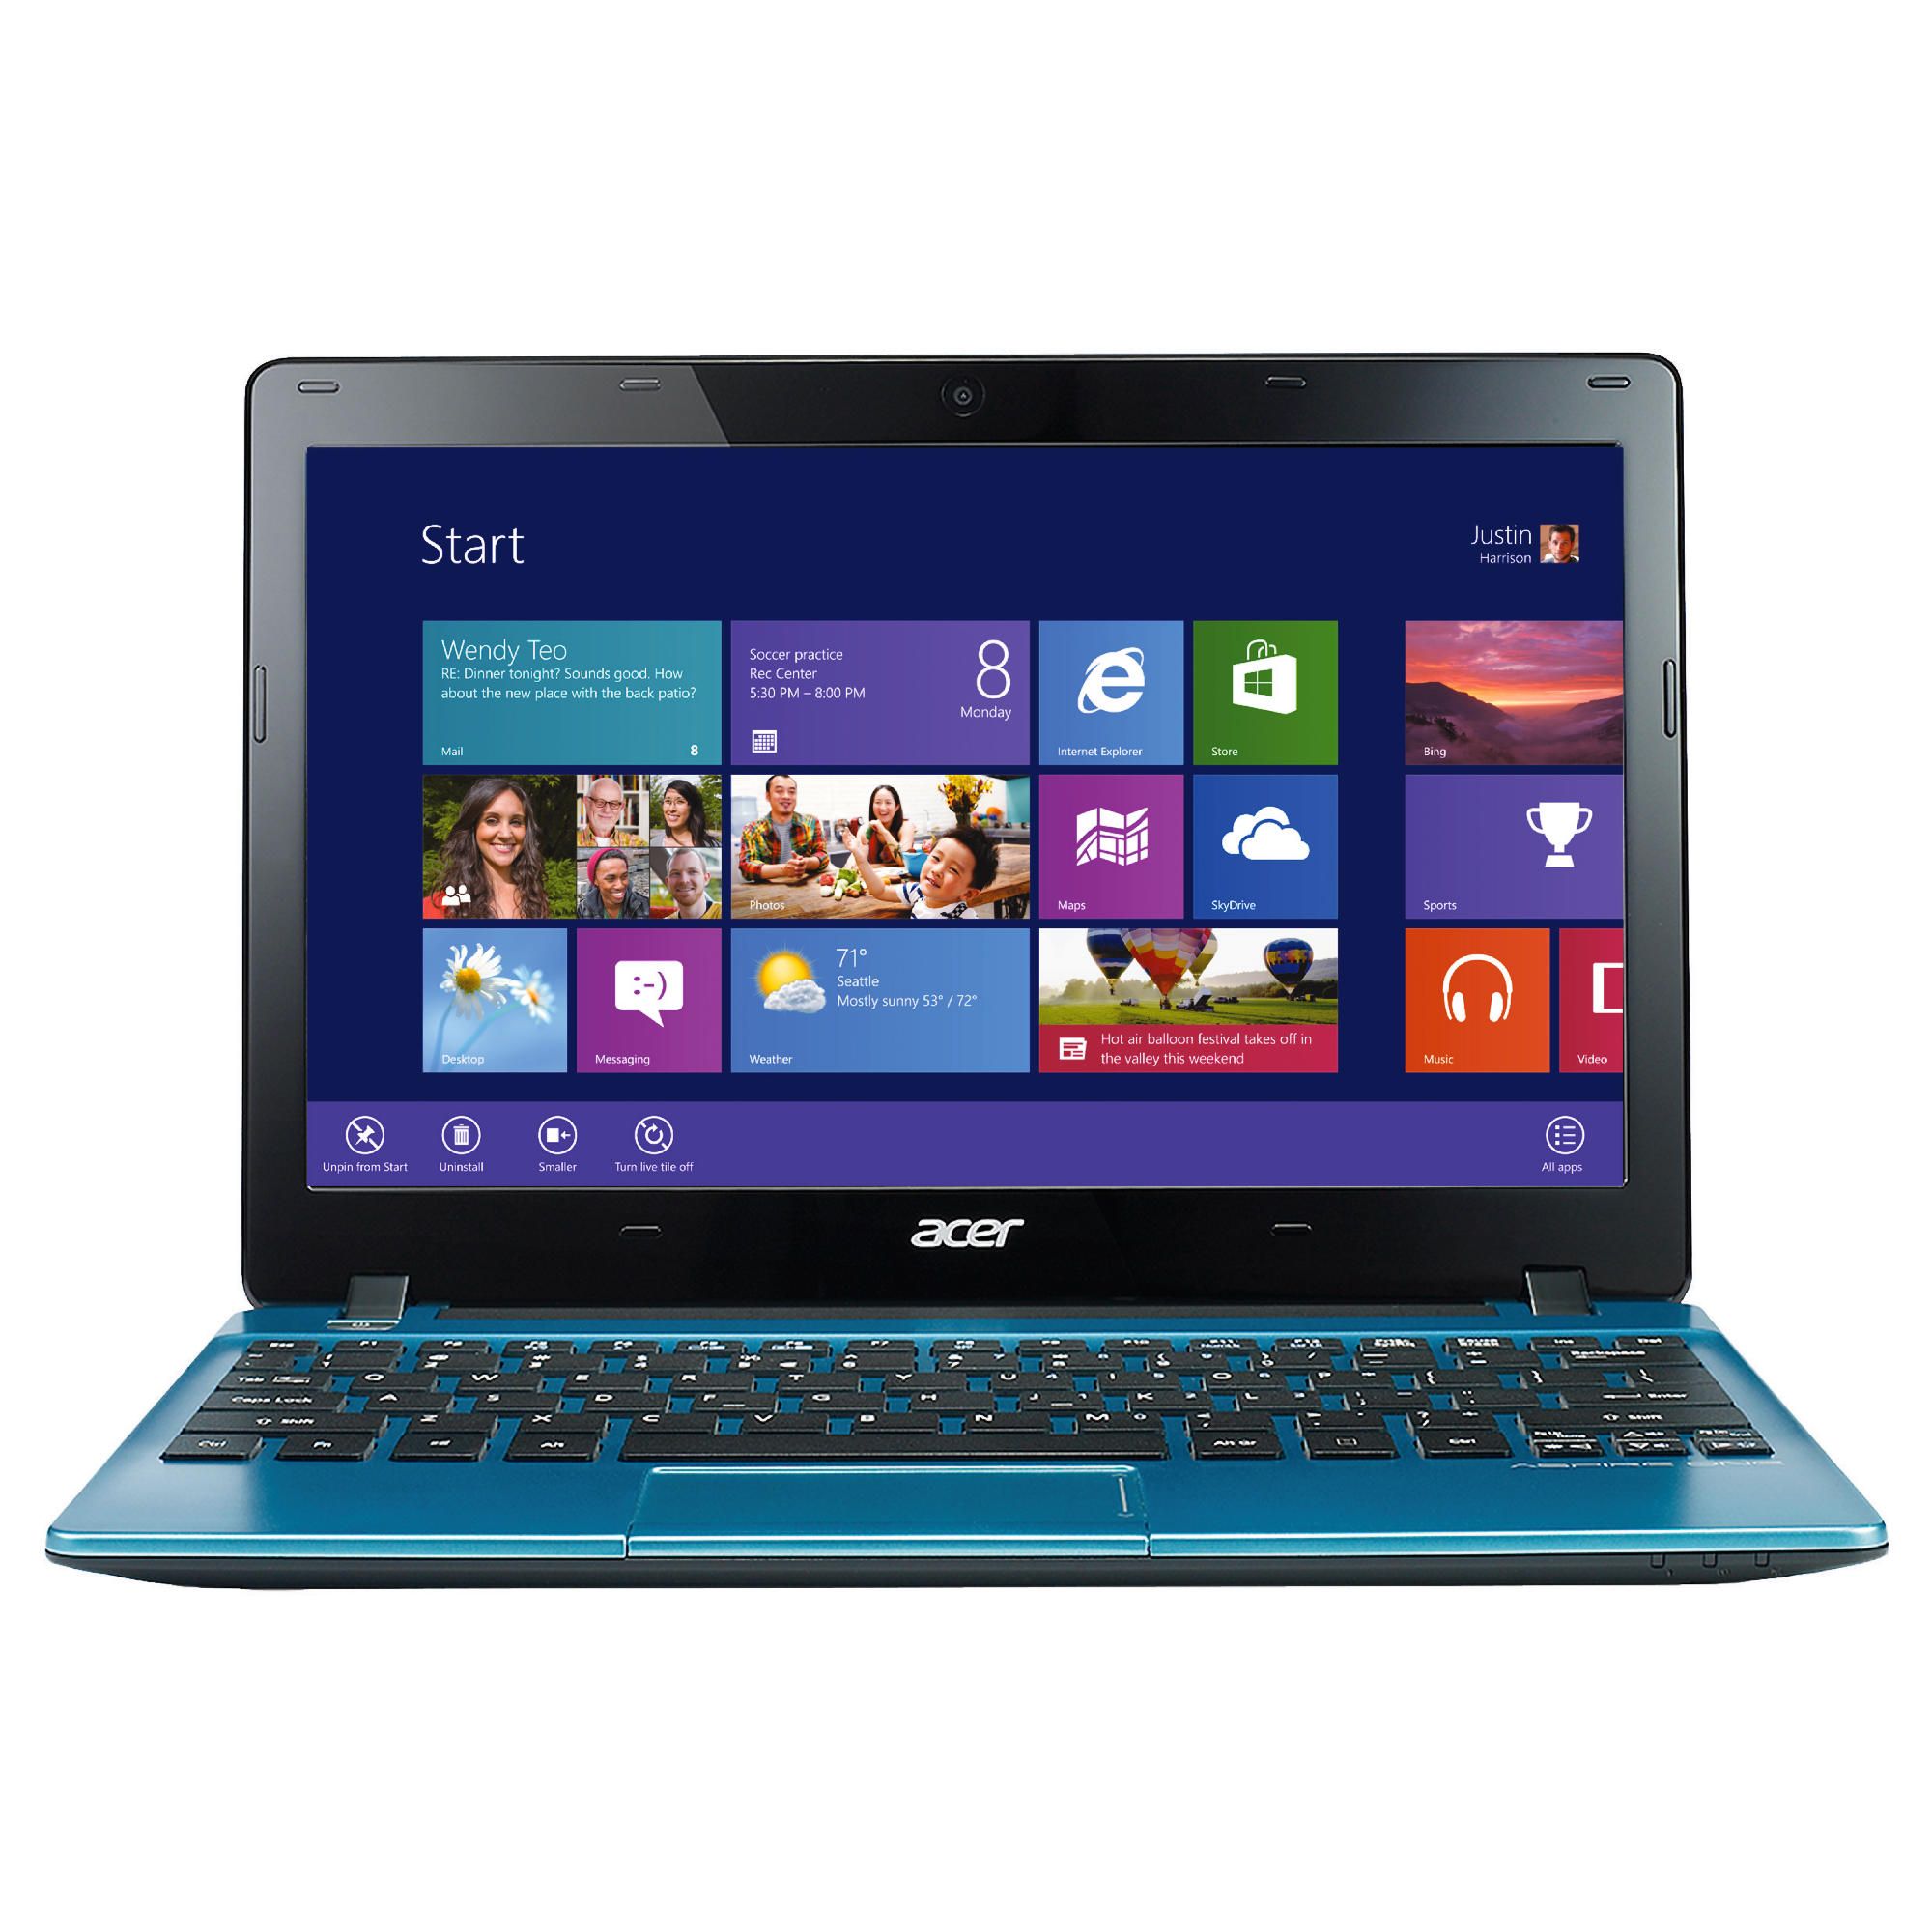 Acer Aspire One 725 11.6 inch AMD Dual-Core, 4GB RAM, 320GB, Windows 8, Blue Netbook at Tesco Direct